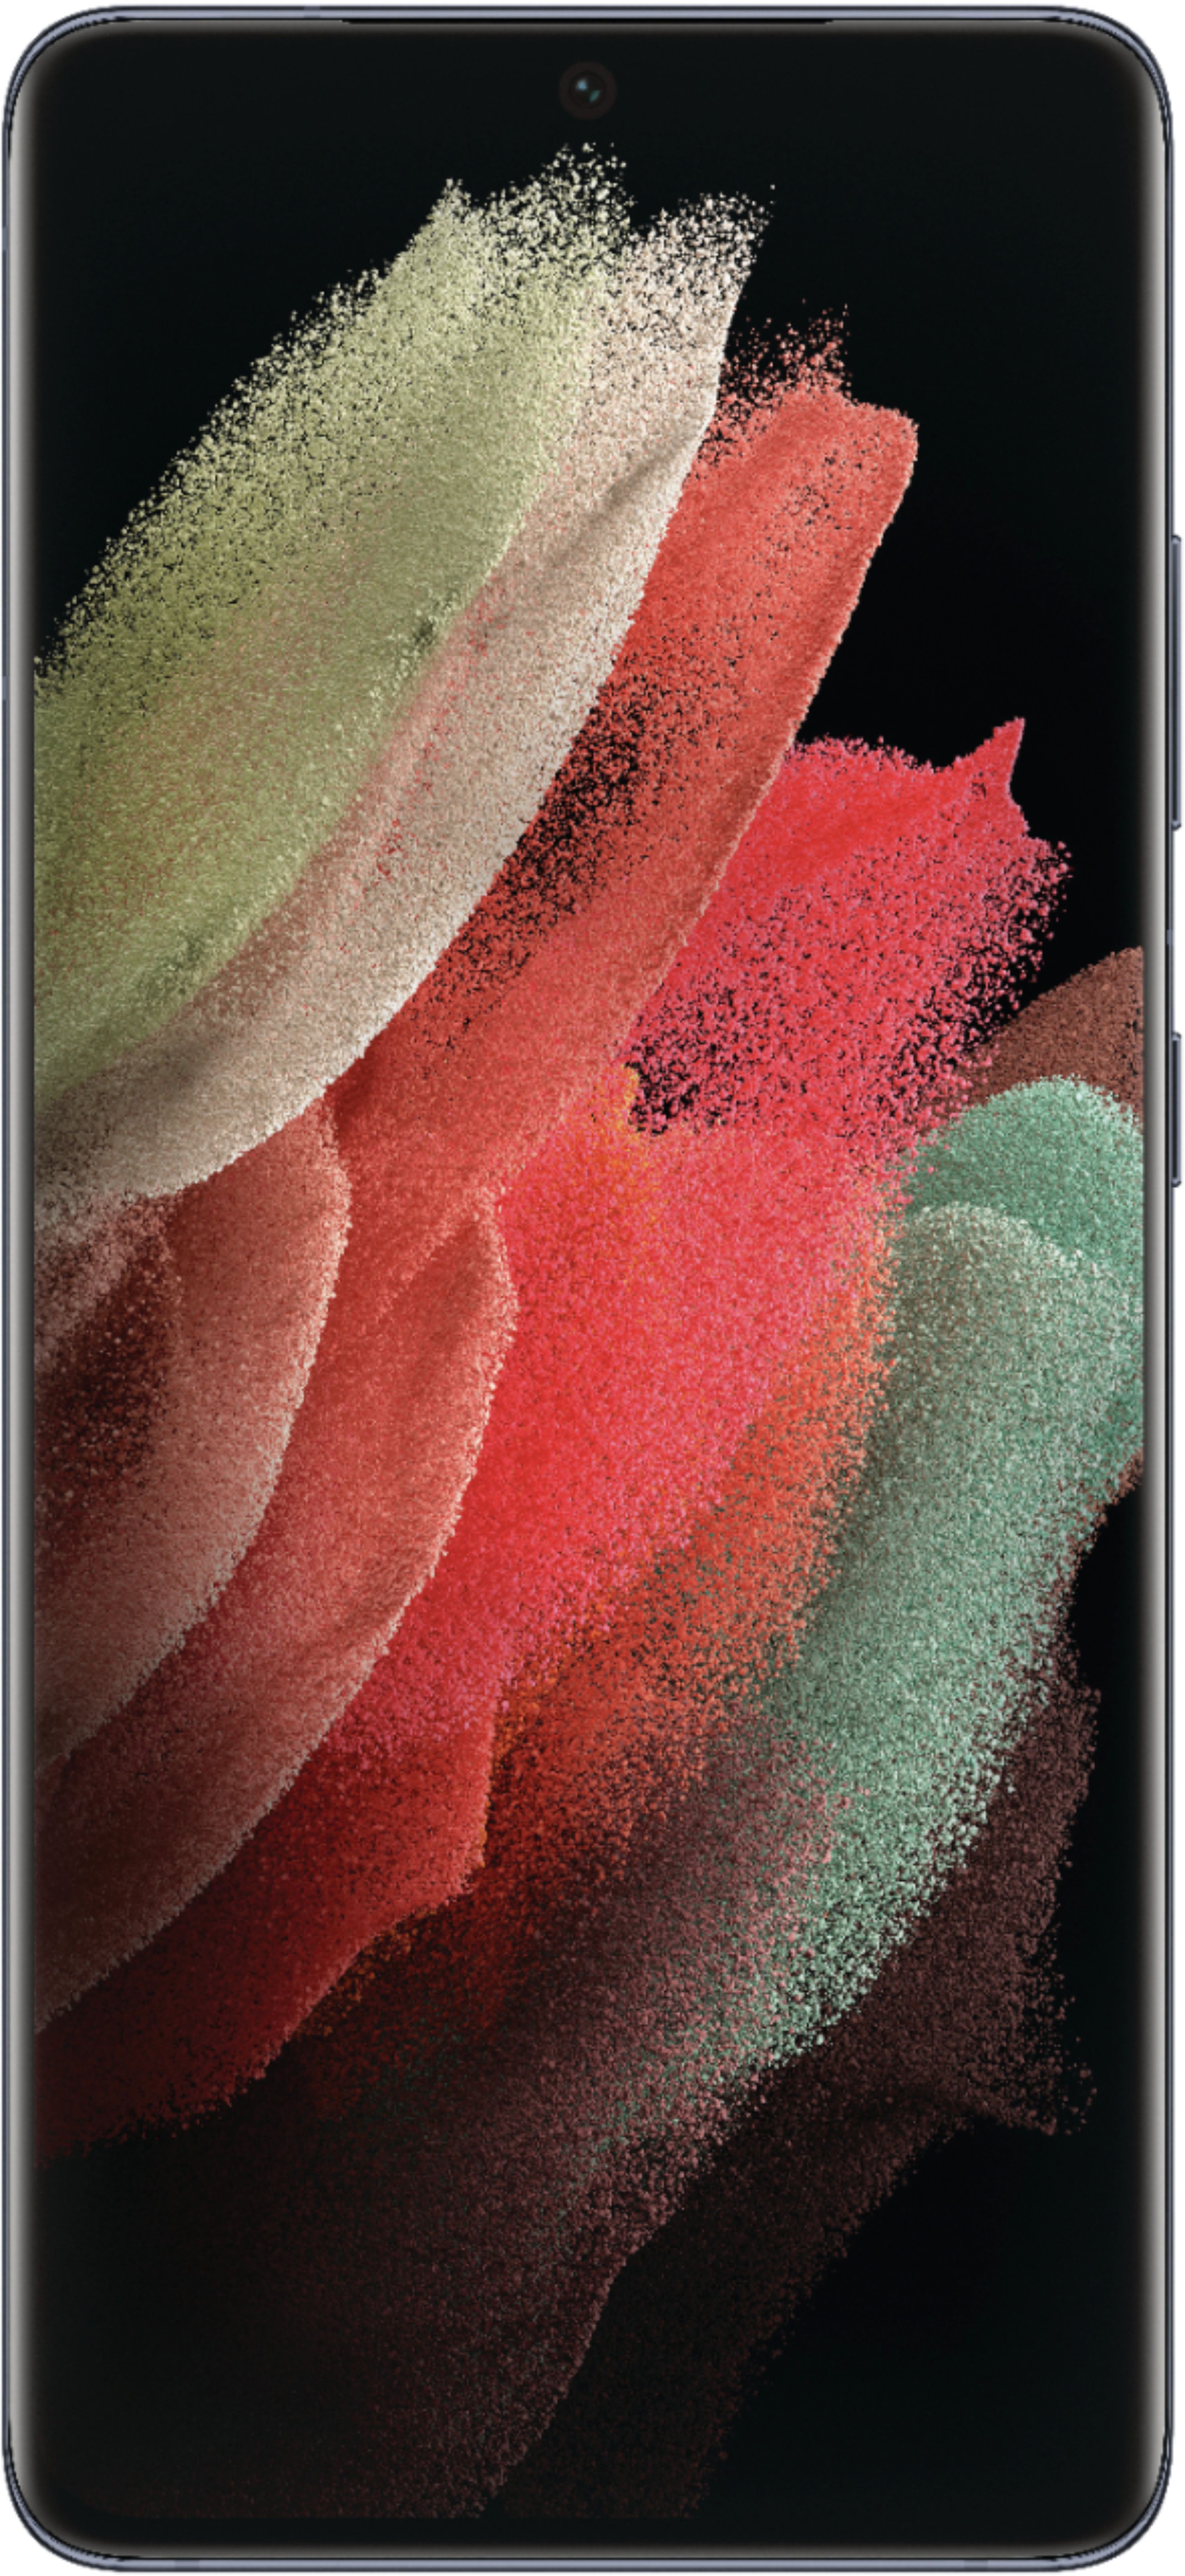 Samsung Galaxy S21 Ultra 5G 128GB (Unlocked) Navy SM-G998UZBAXAA - Best Buy